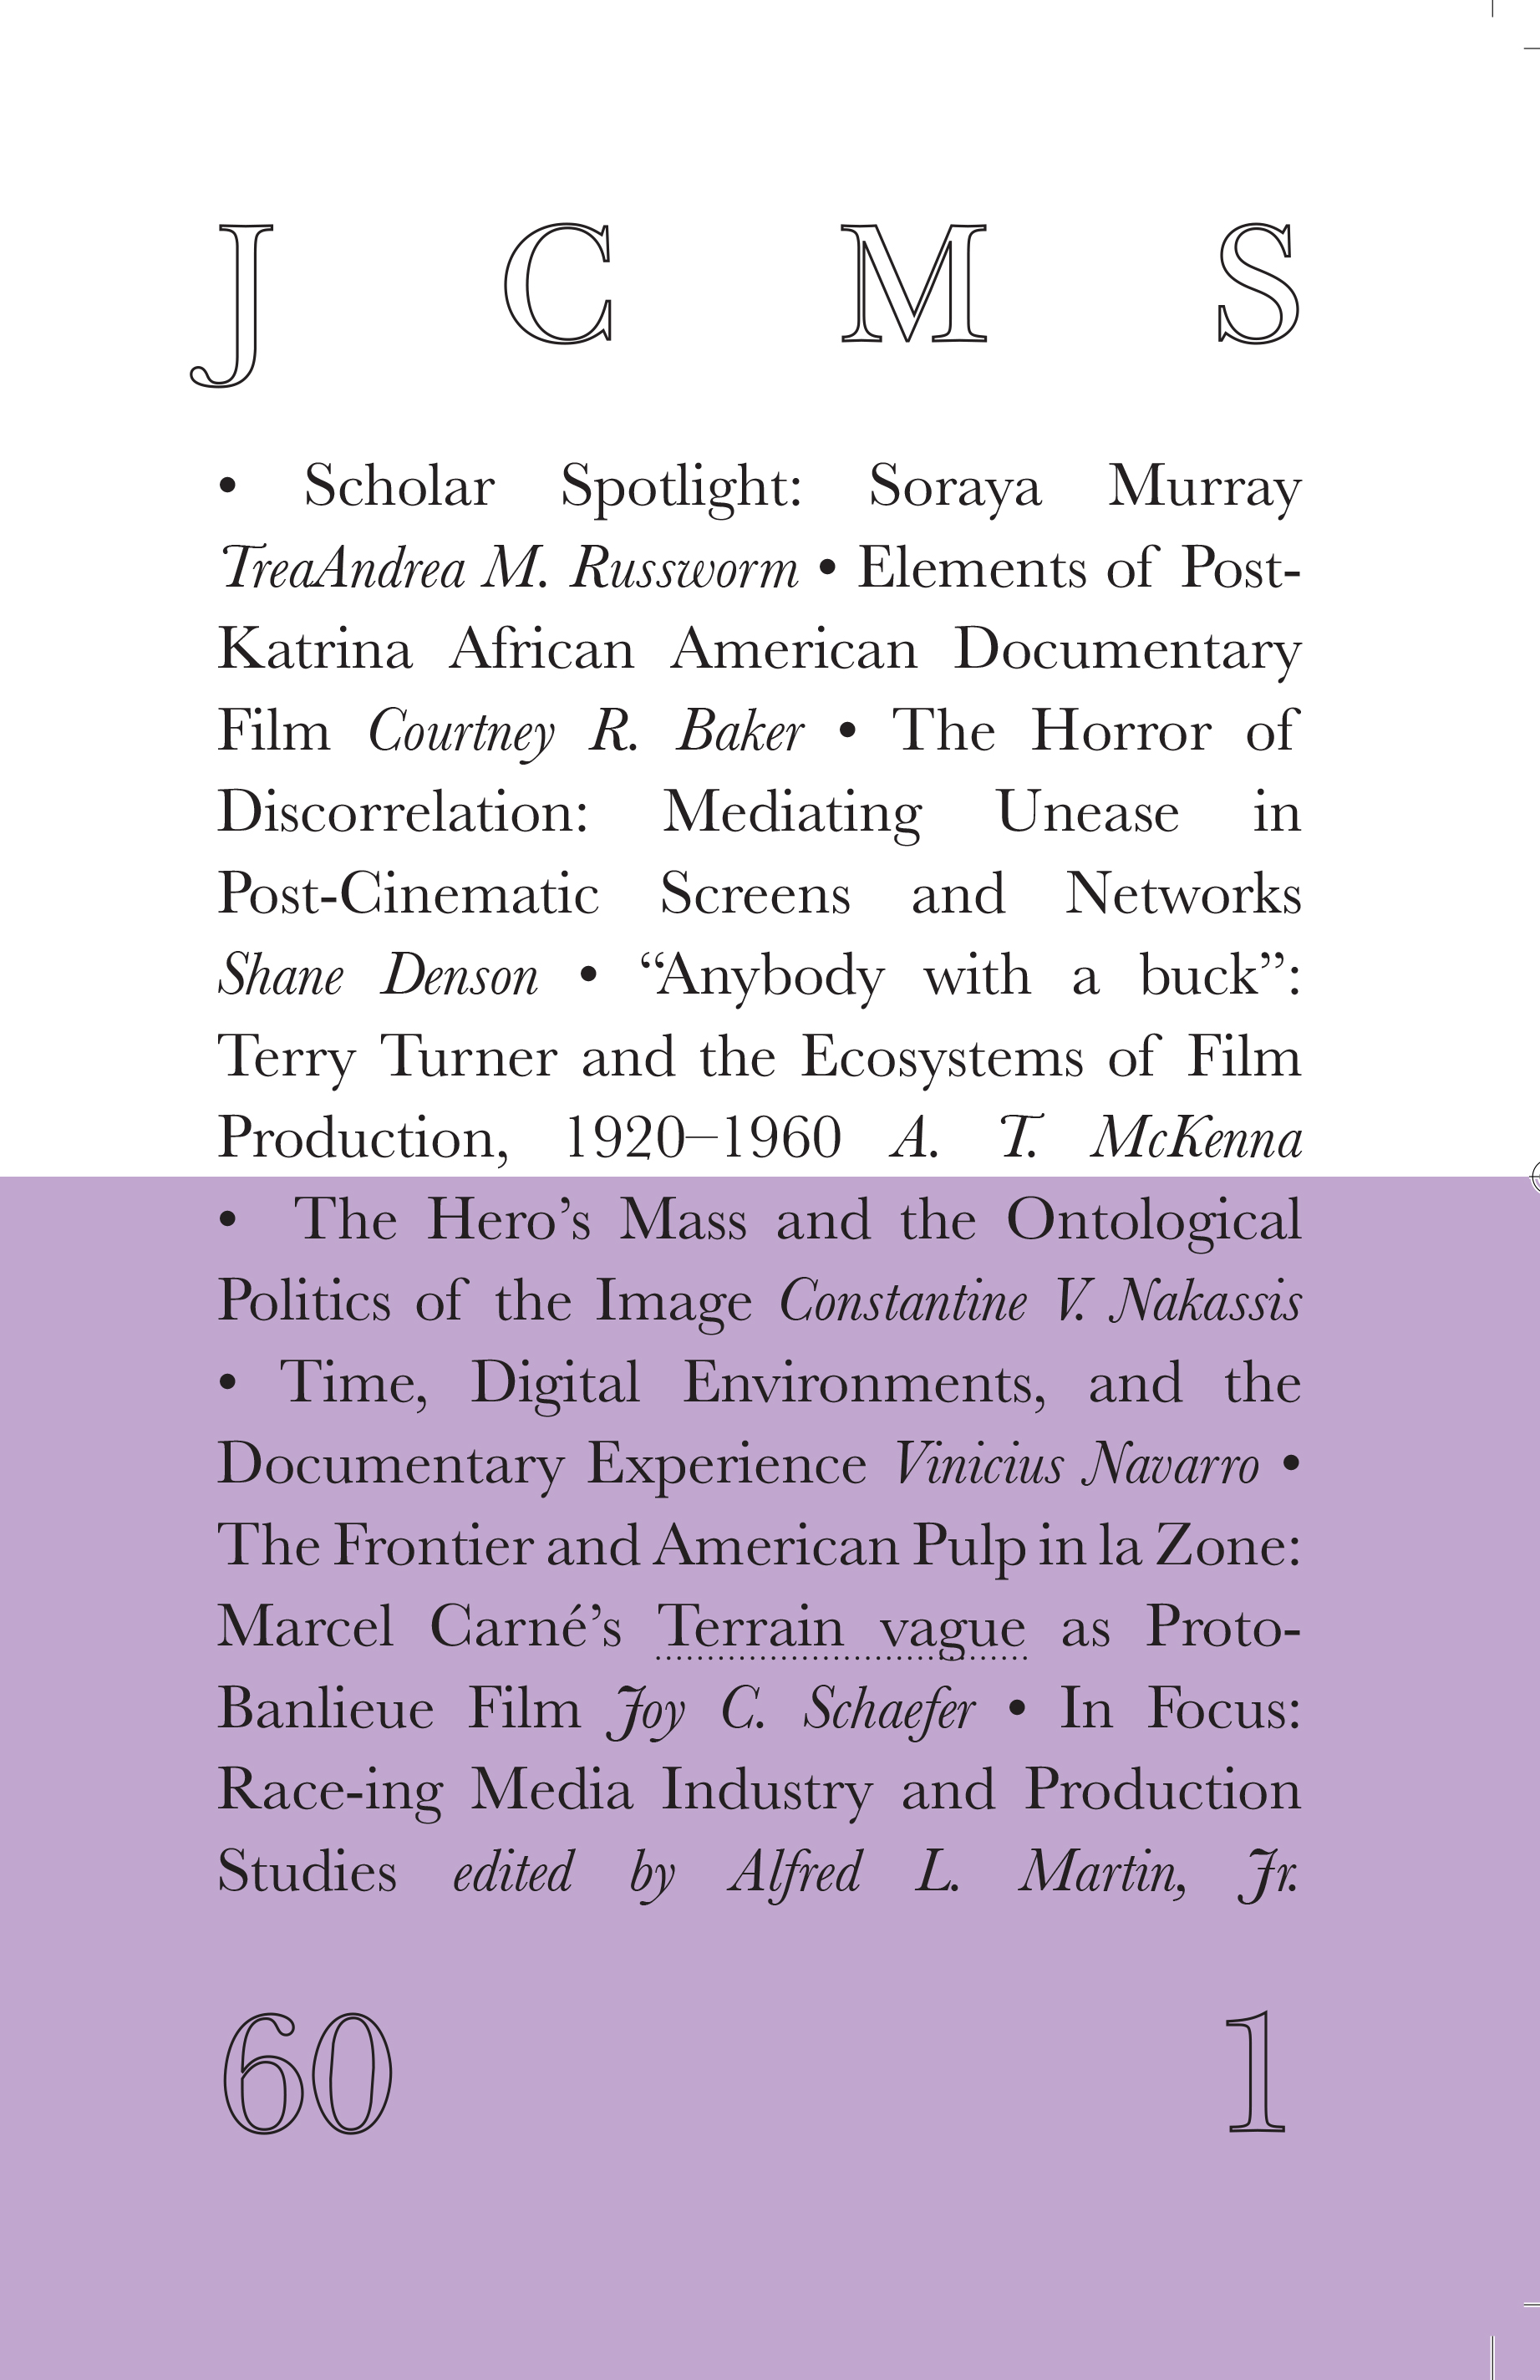 Journal of Cinema and Media Studies, vol. 60, no. 1